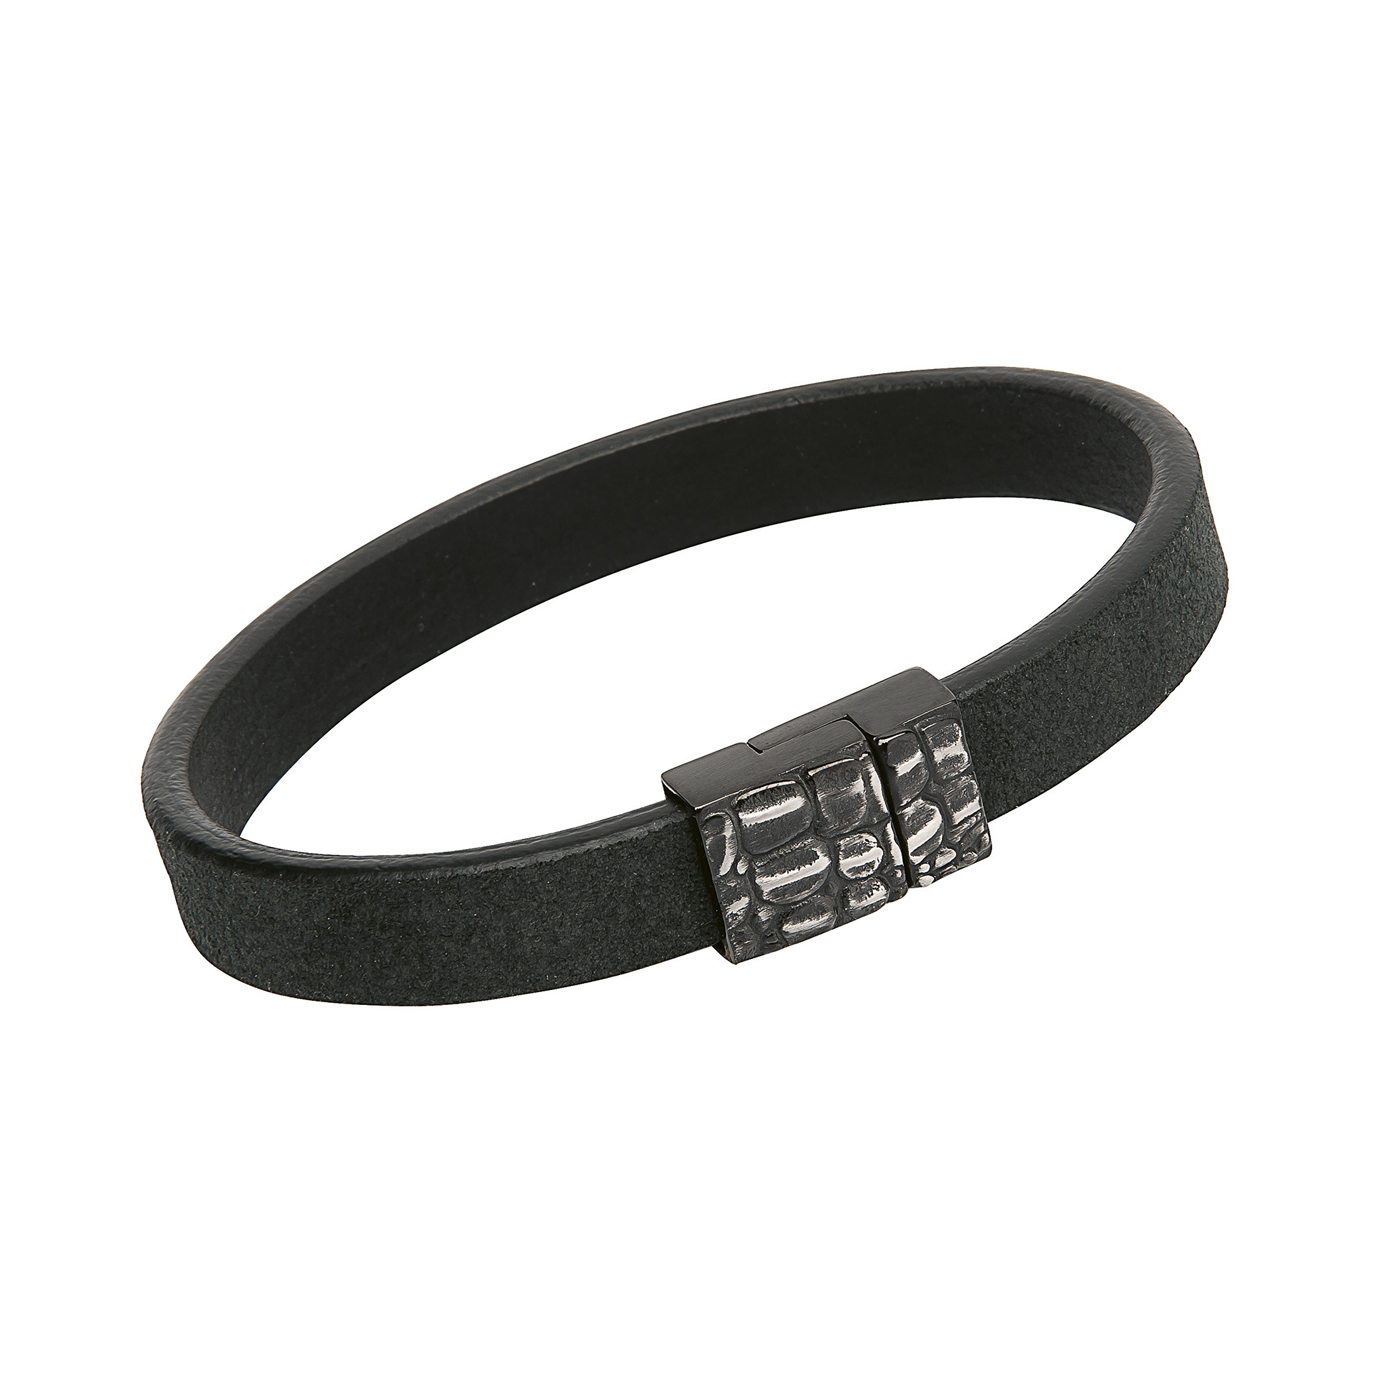 Armband, Veloursleder schwarz, Länge 19 cm - 1 Stück